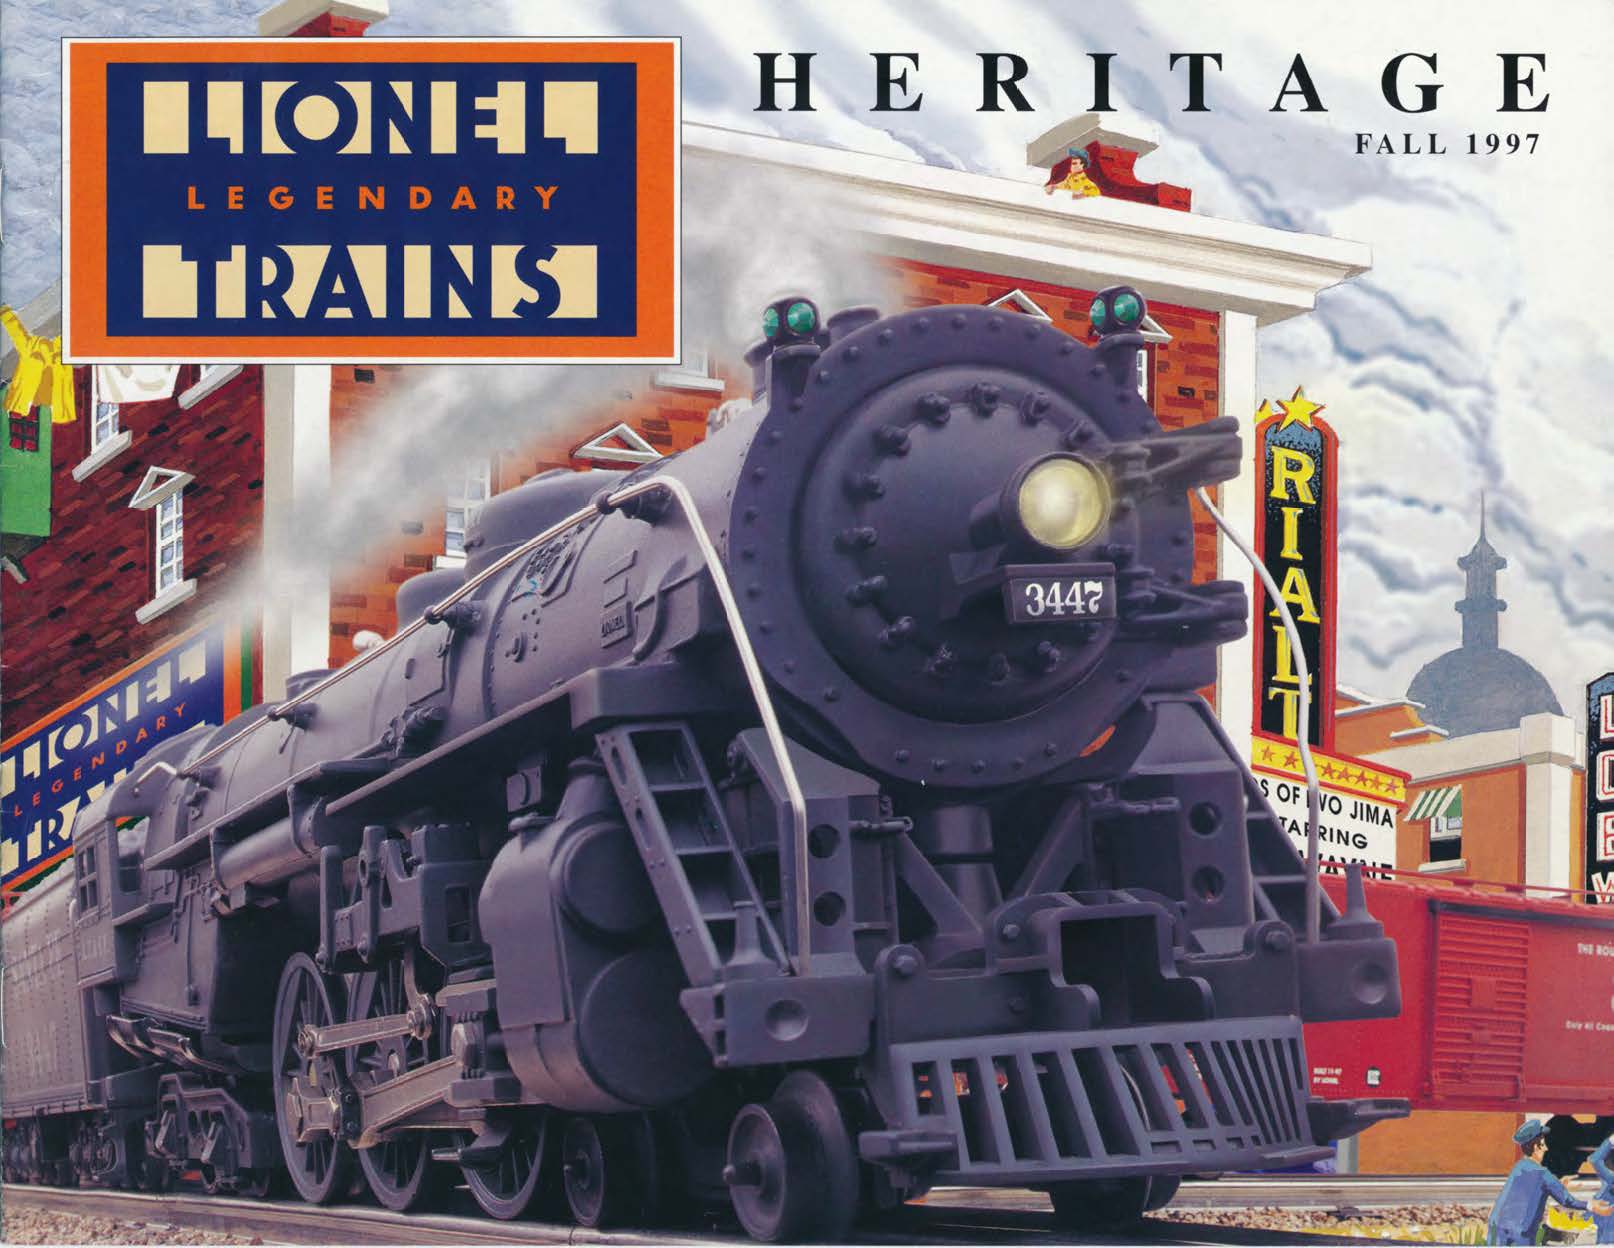 1997 heritage fall Lionel Catalogs